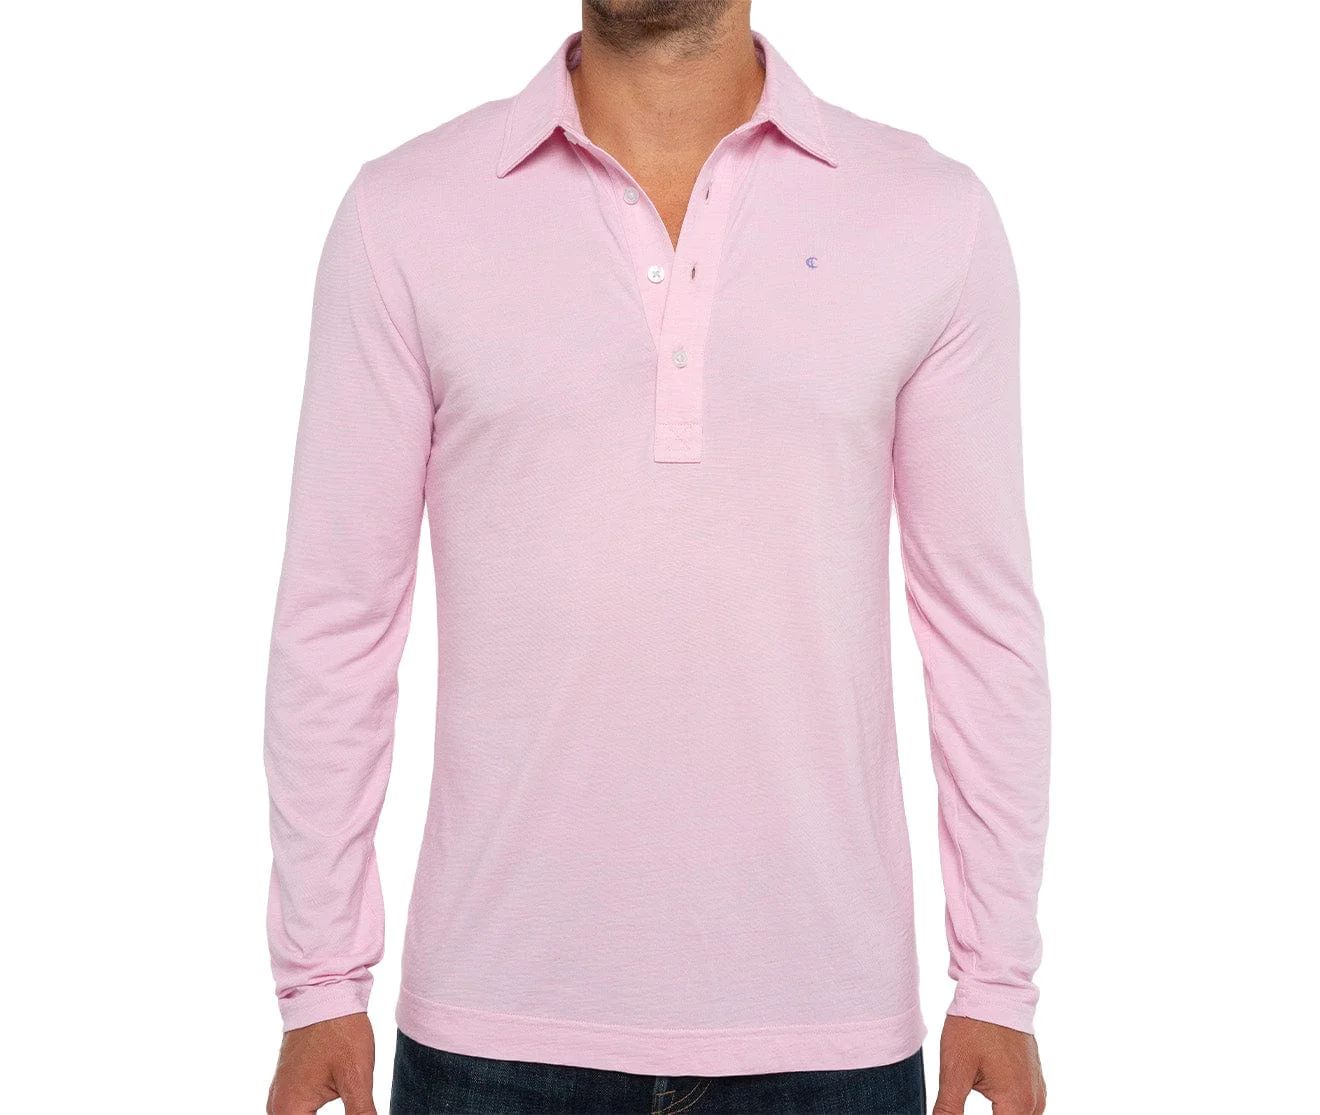 brrr° Long Sleeve Range Polo - Light Pink | Criquet Apparel